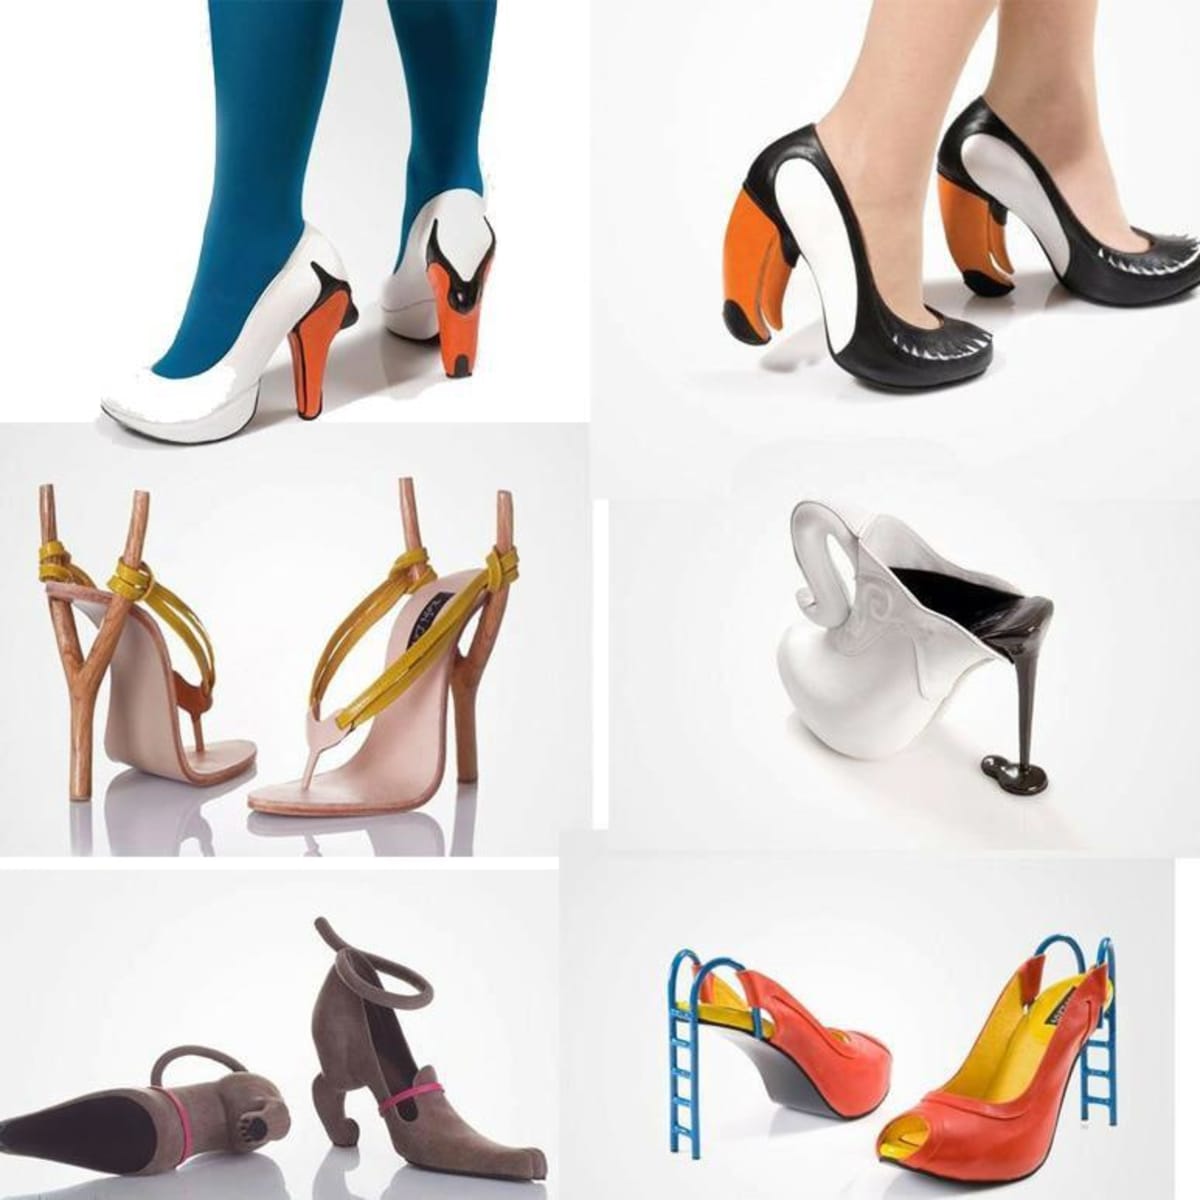 Why Women Should Not Wear High Heels Too Often | Greater Life Chiropractic